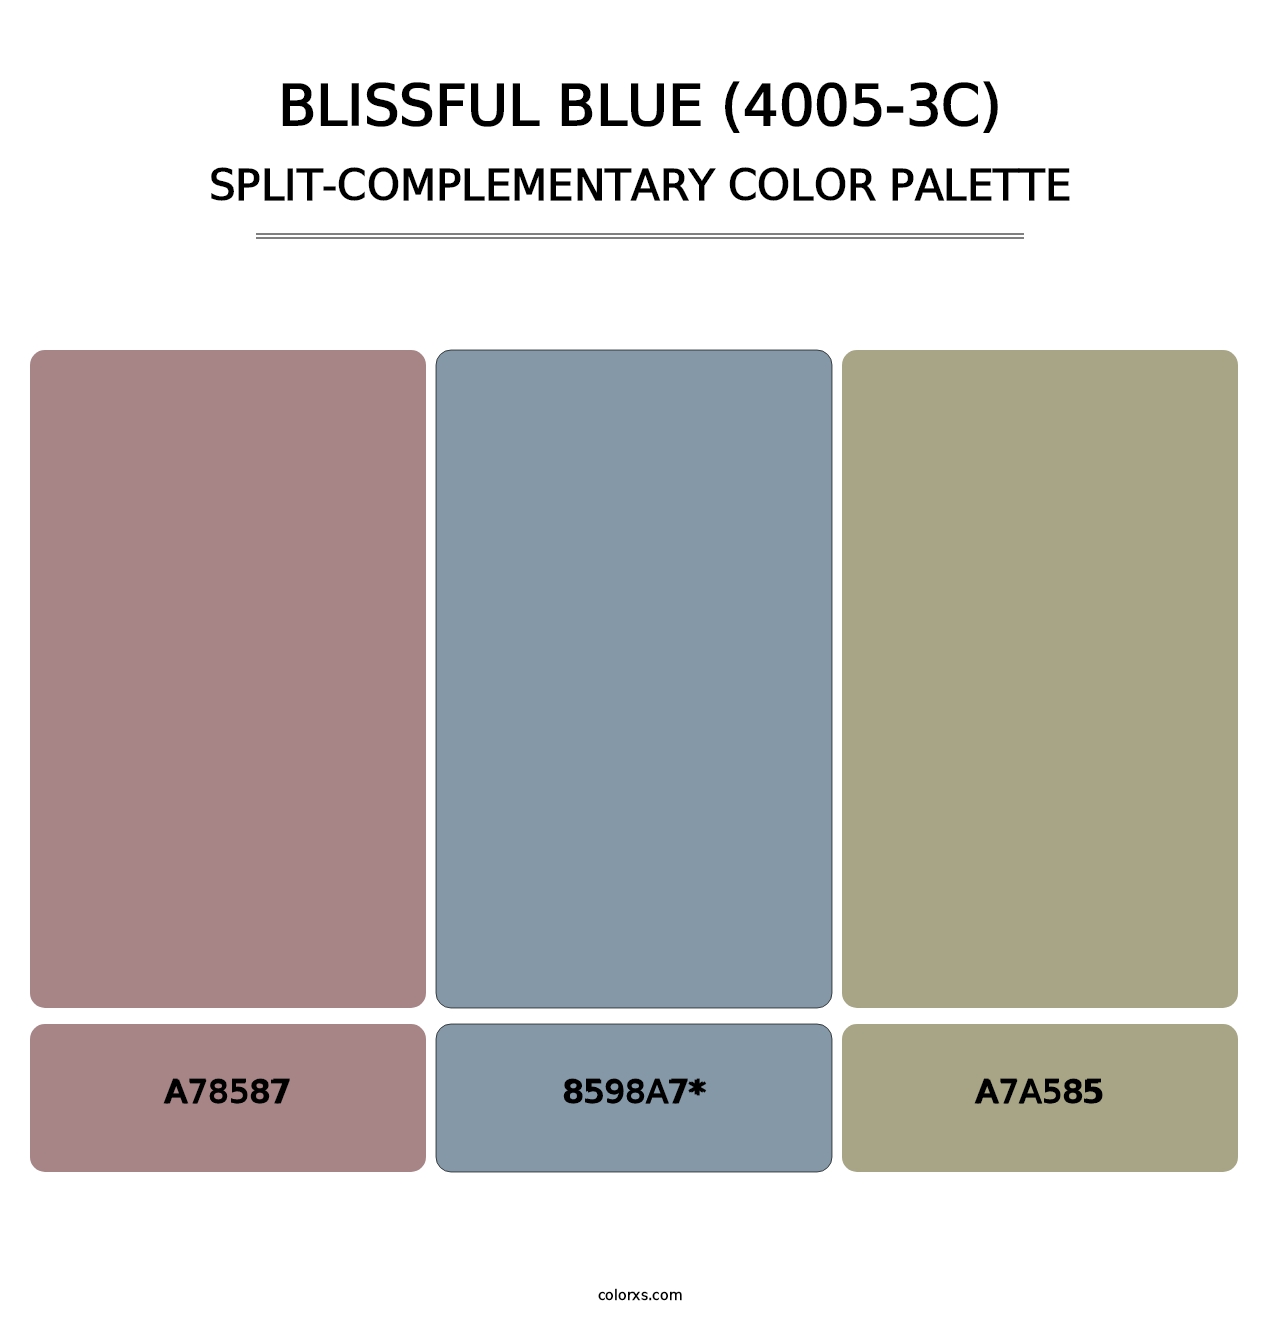 Blissful Blue (4005-3C) - Split-Complementary Color Palette